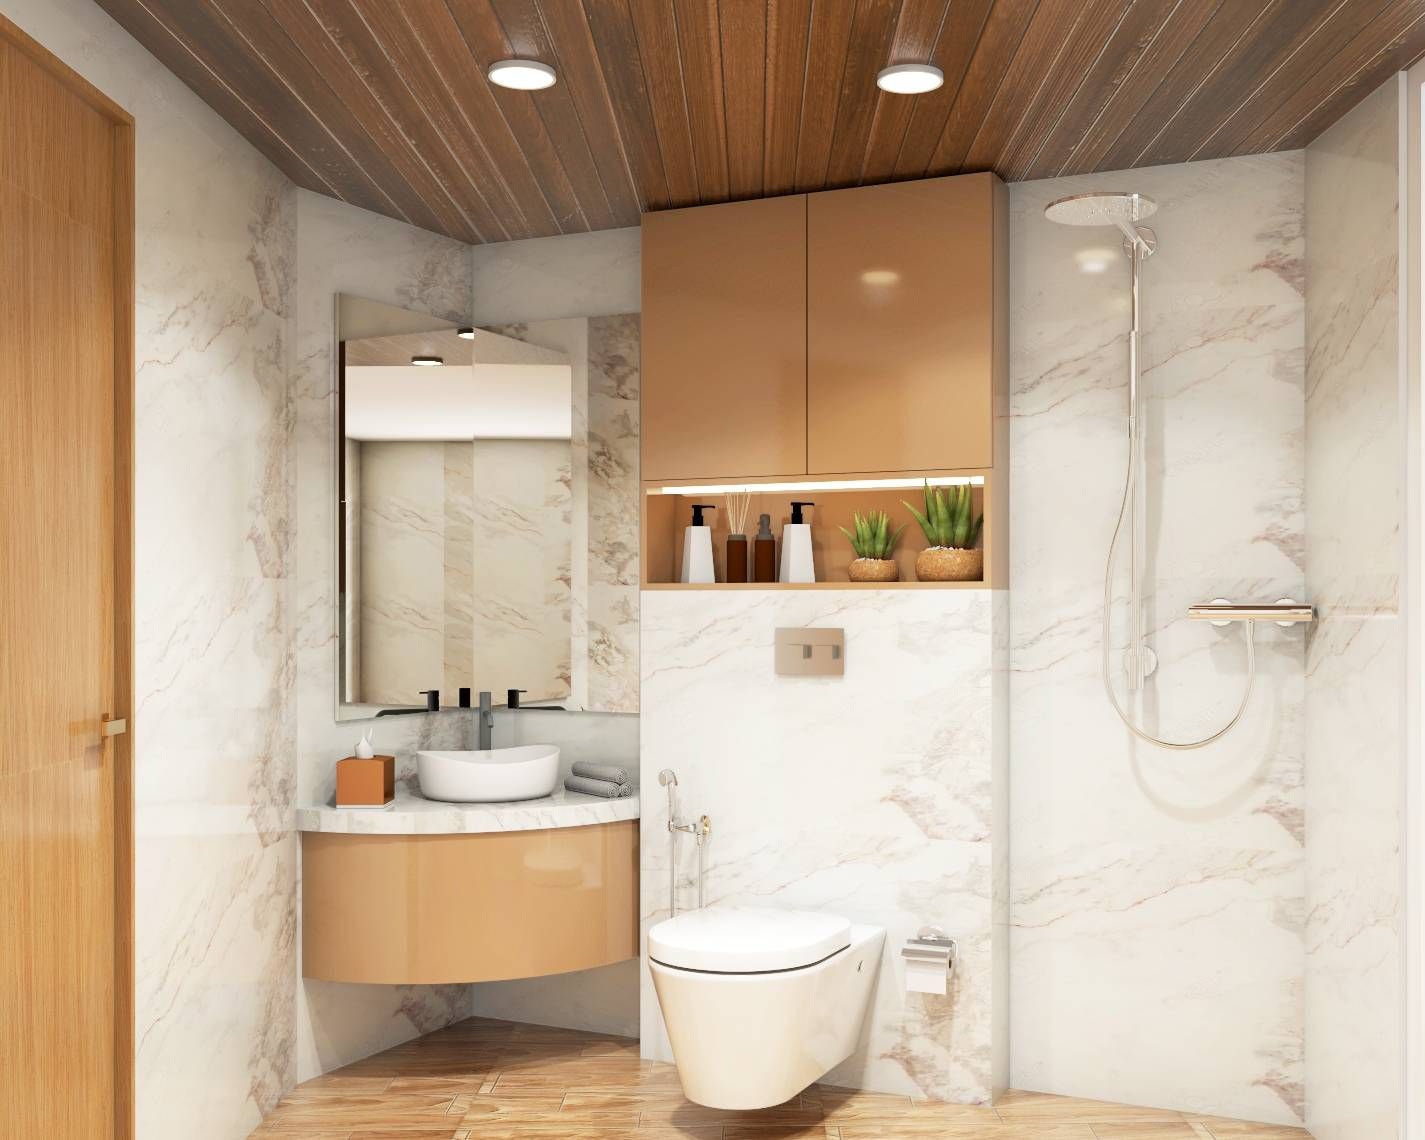 Modern Bathroom Design With Wooden Ceiling